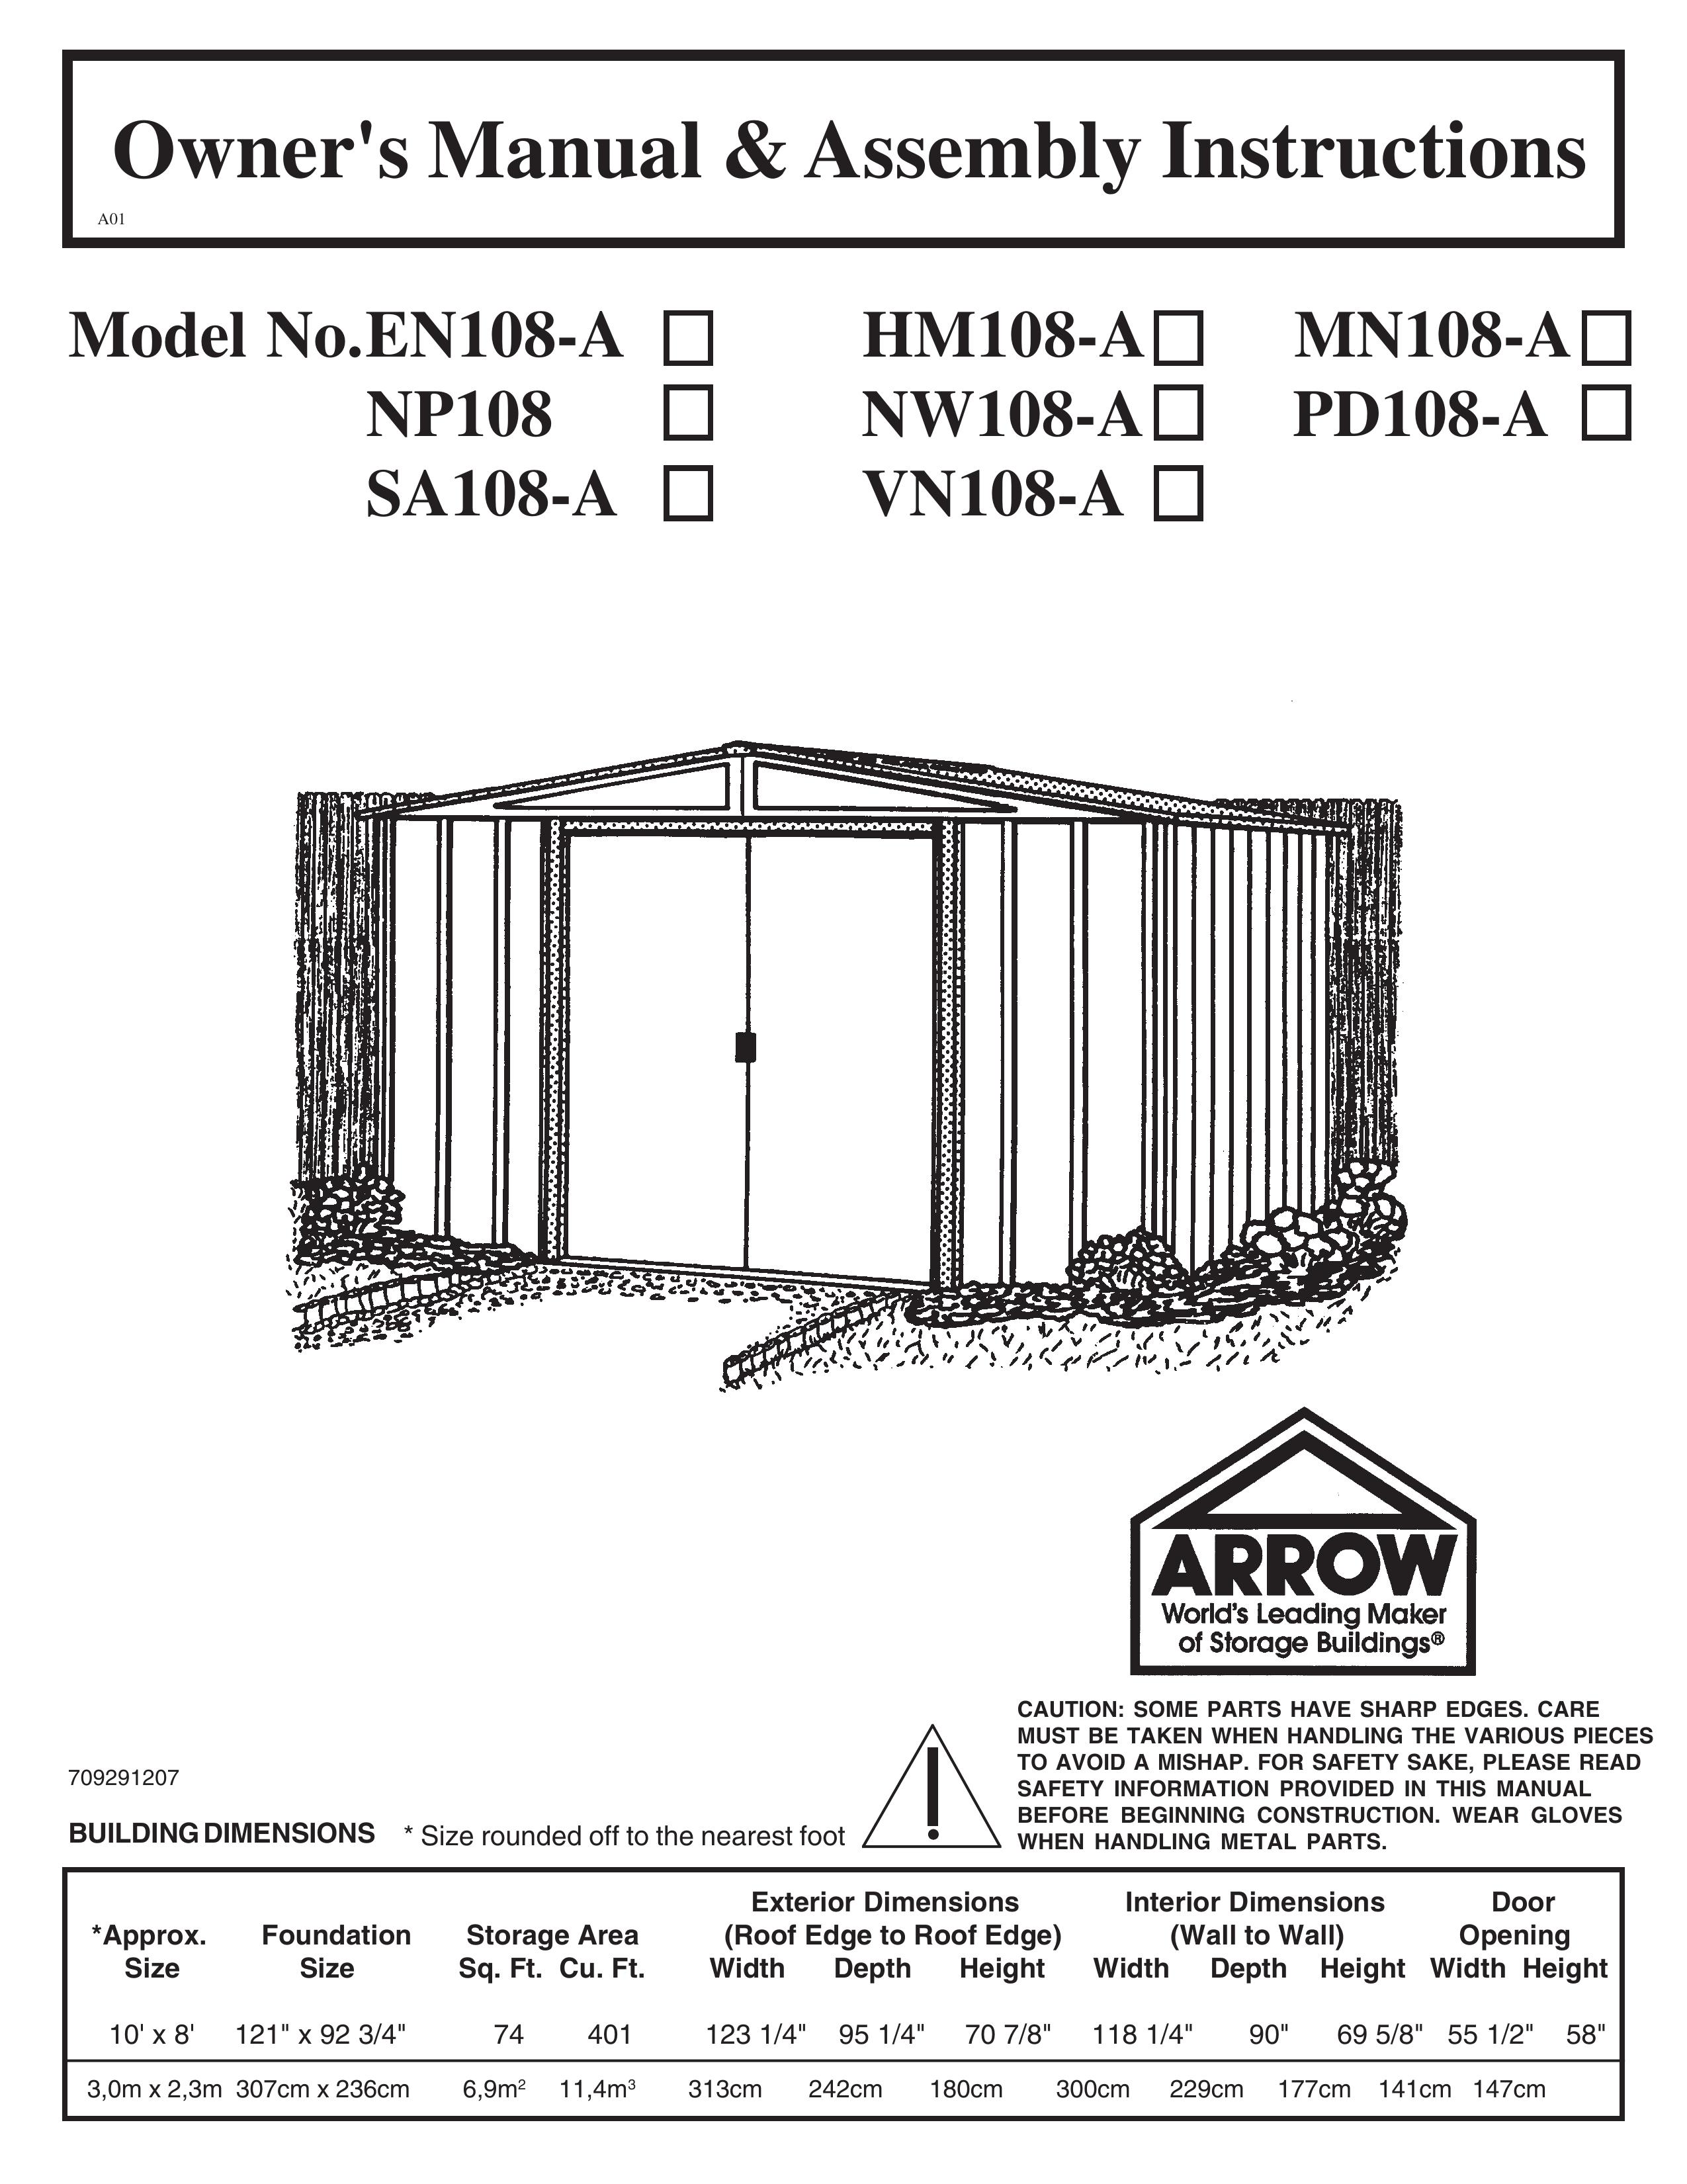 Arrow Plastic PD108-A Outdoor Storage User Manual